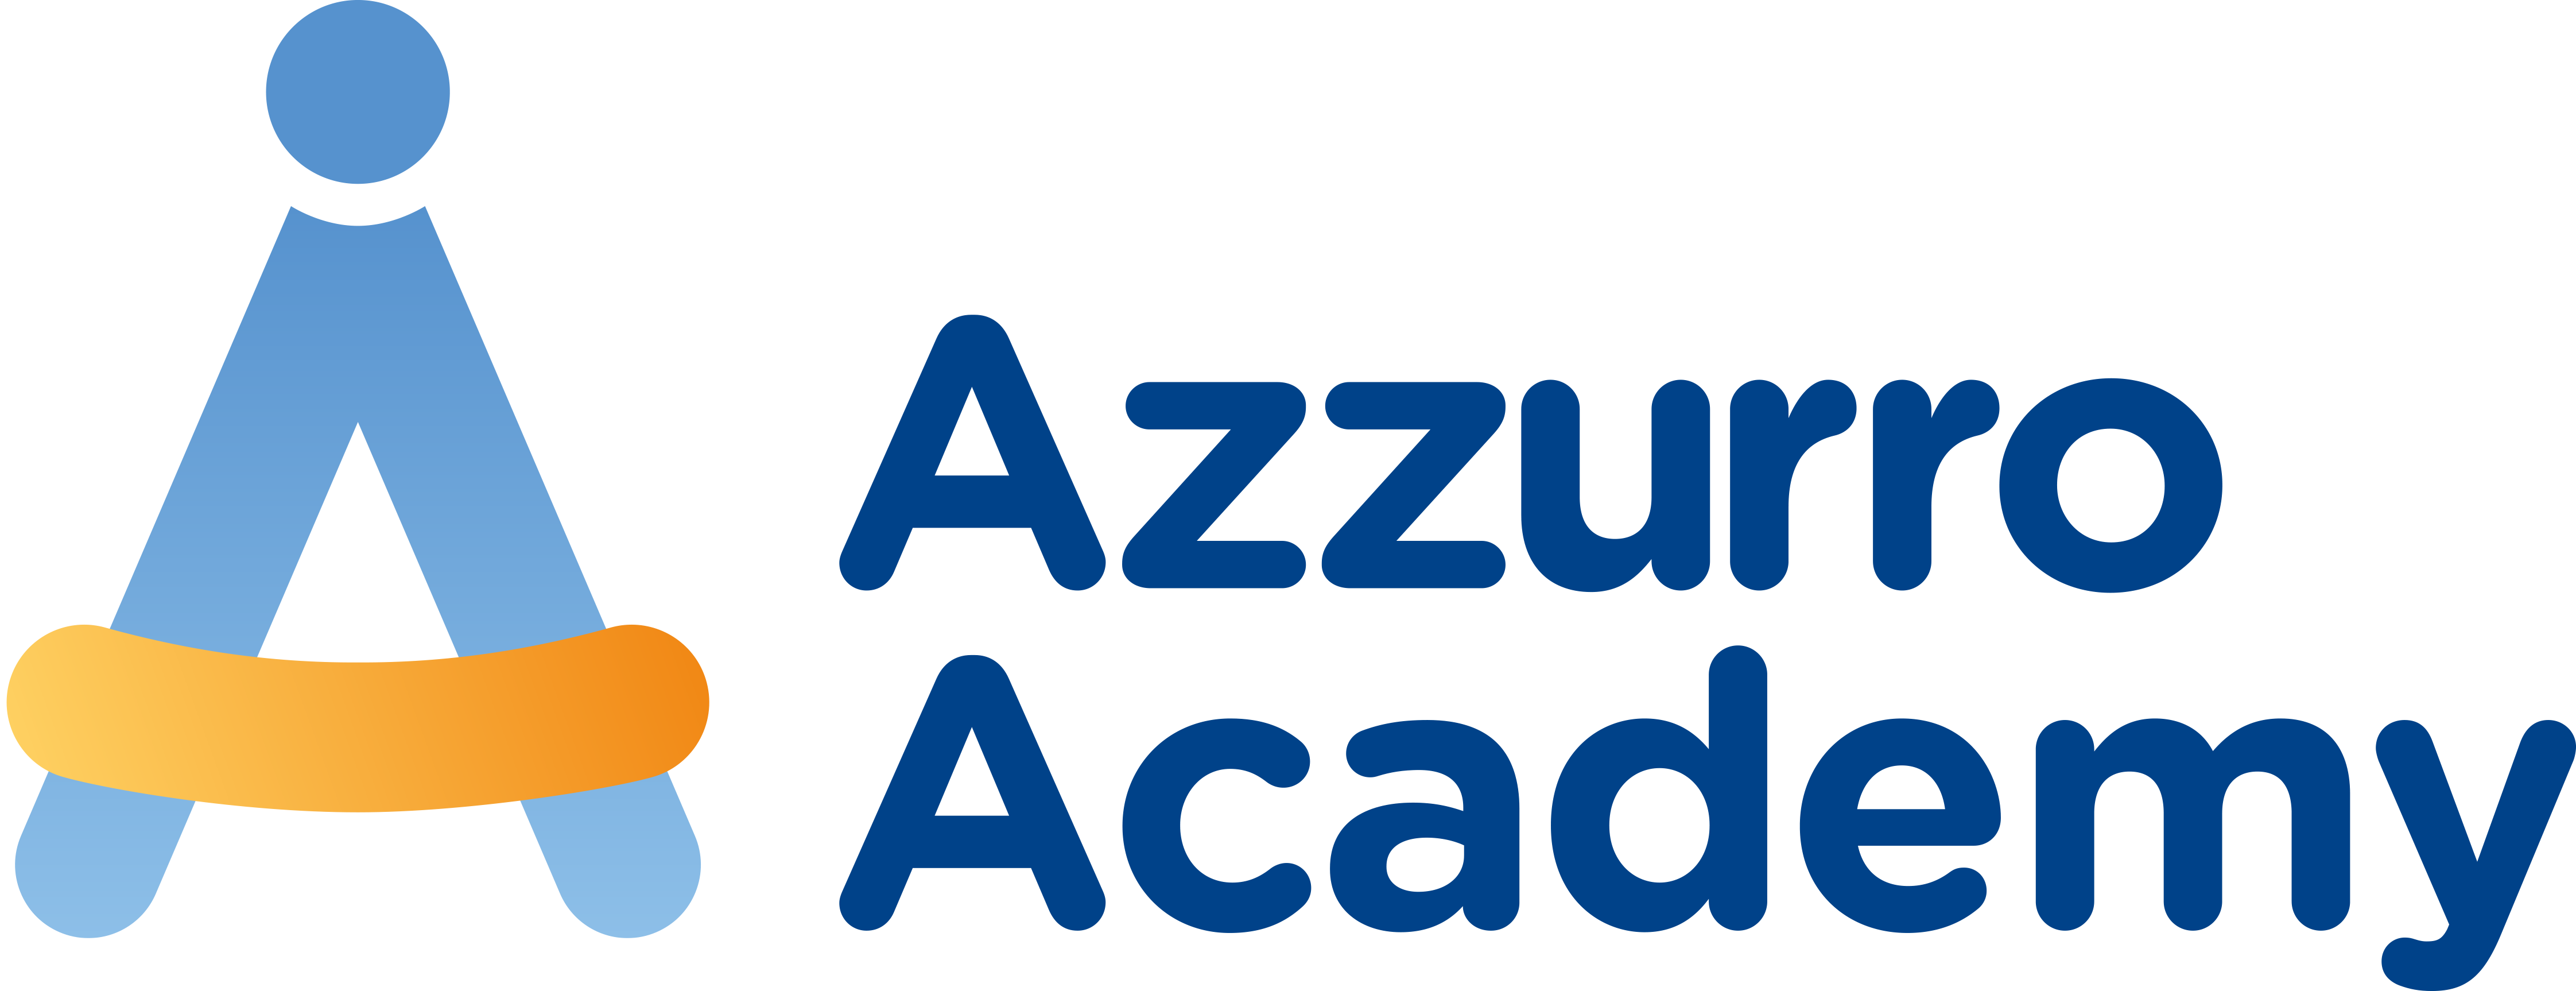 Azzurro Academy